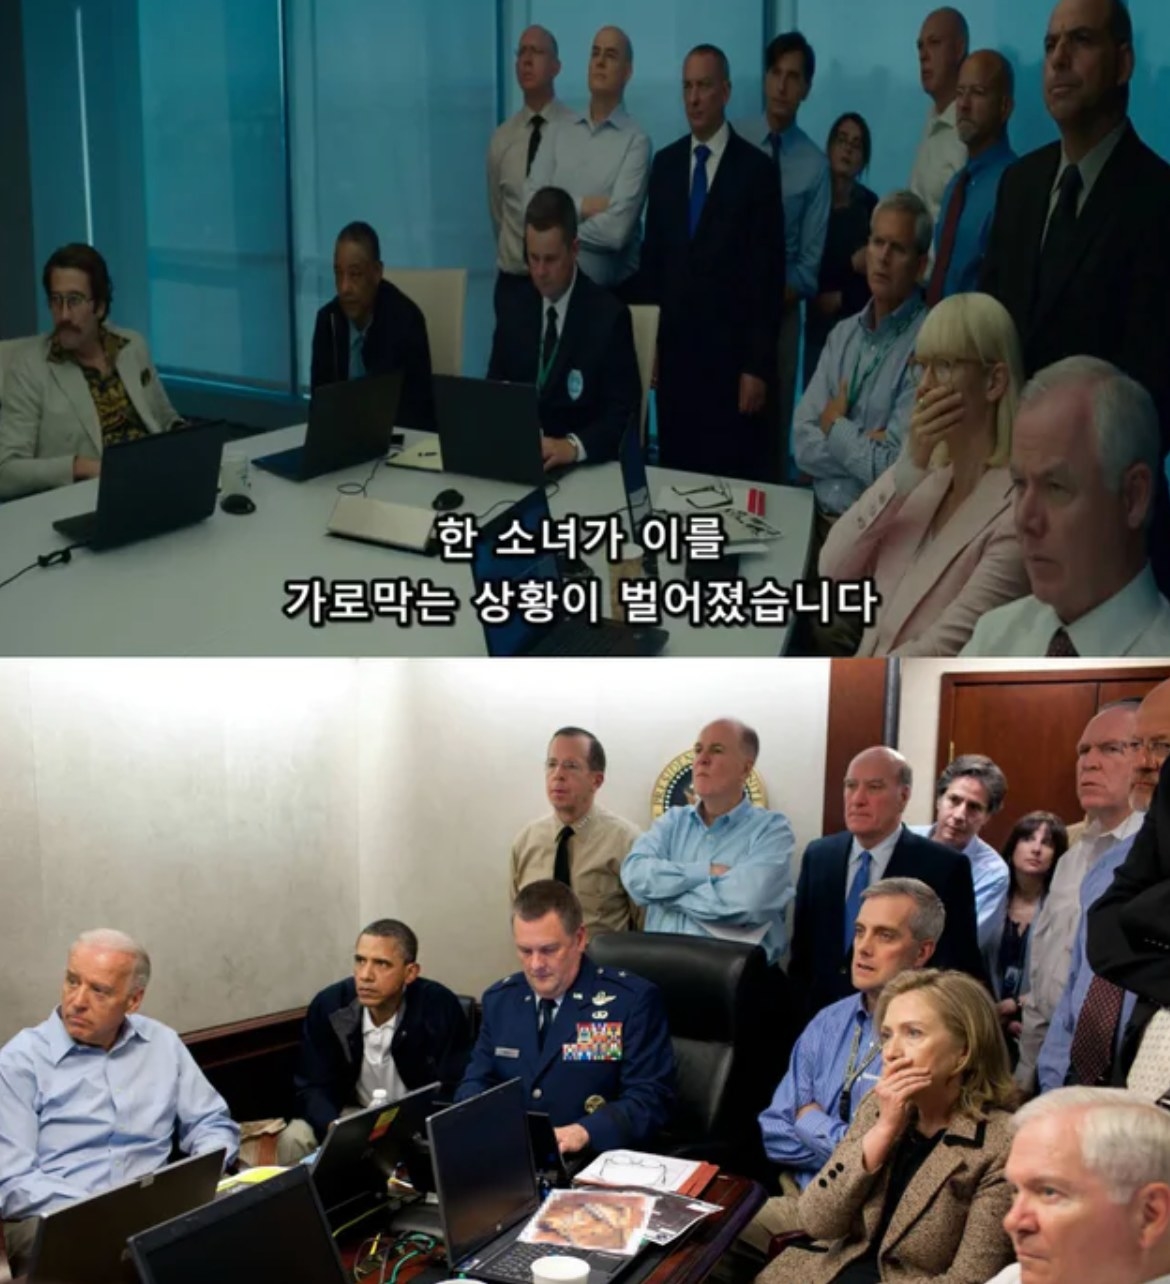 Okja situation room creation vs White House situation room real photo